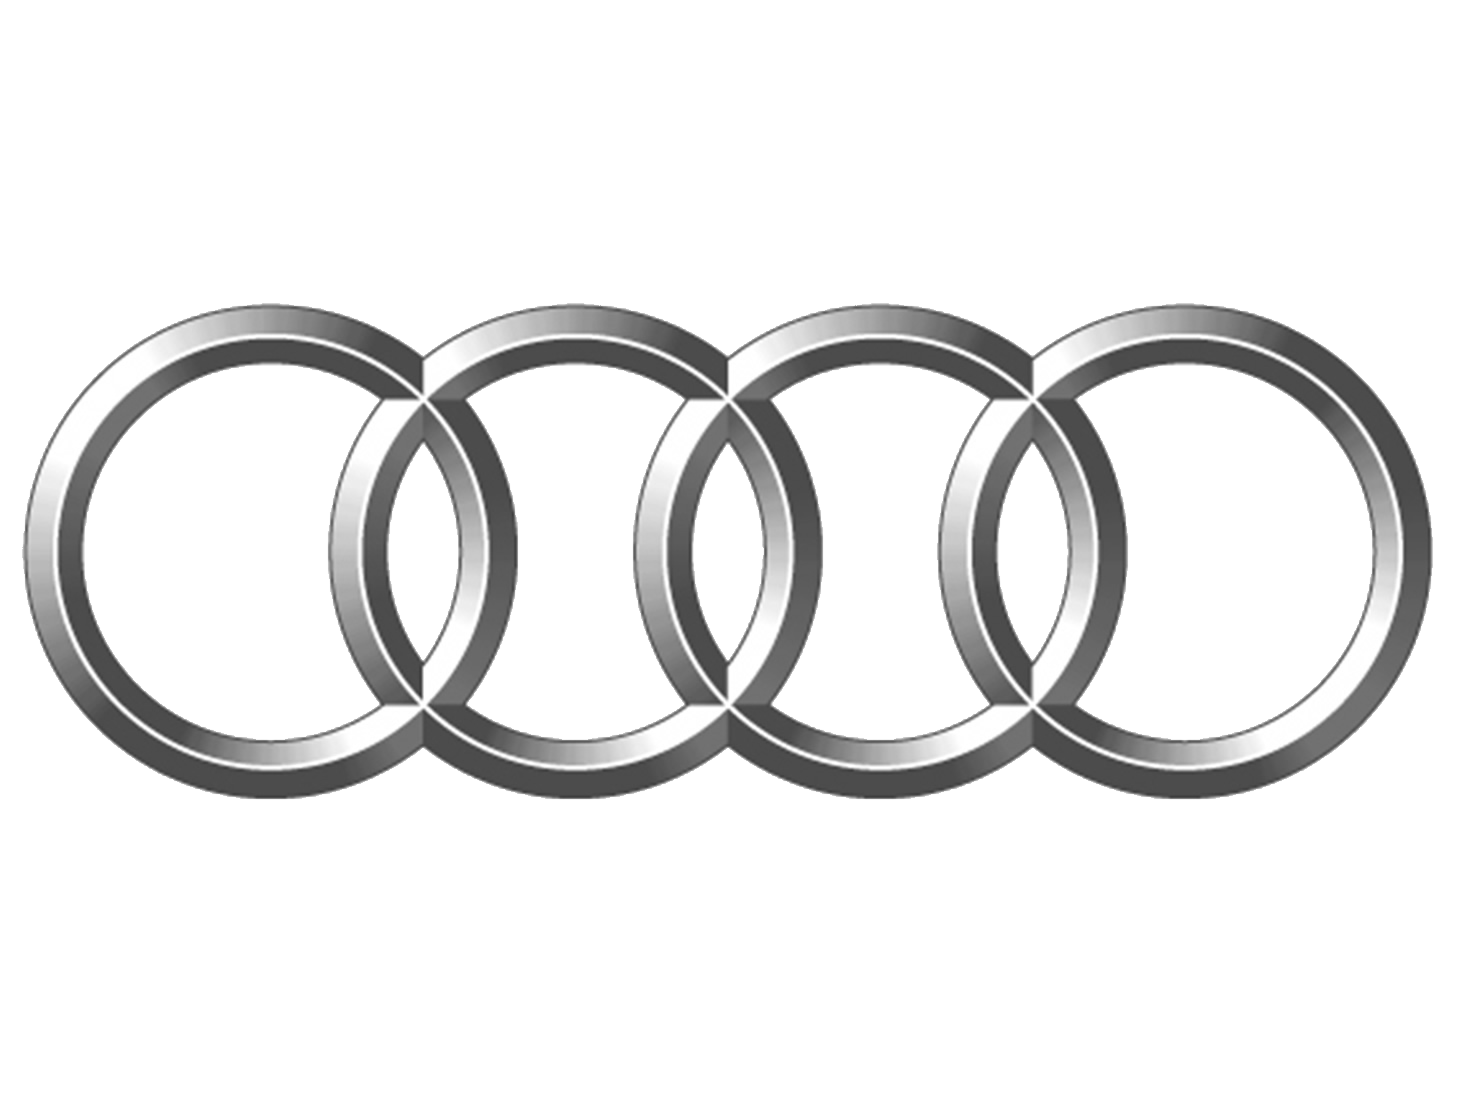 Audi Ring PNG HD Quality